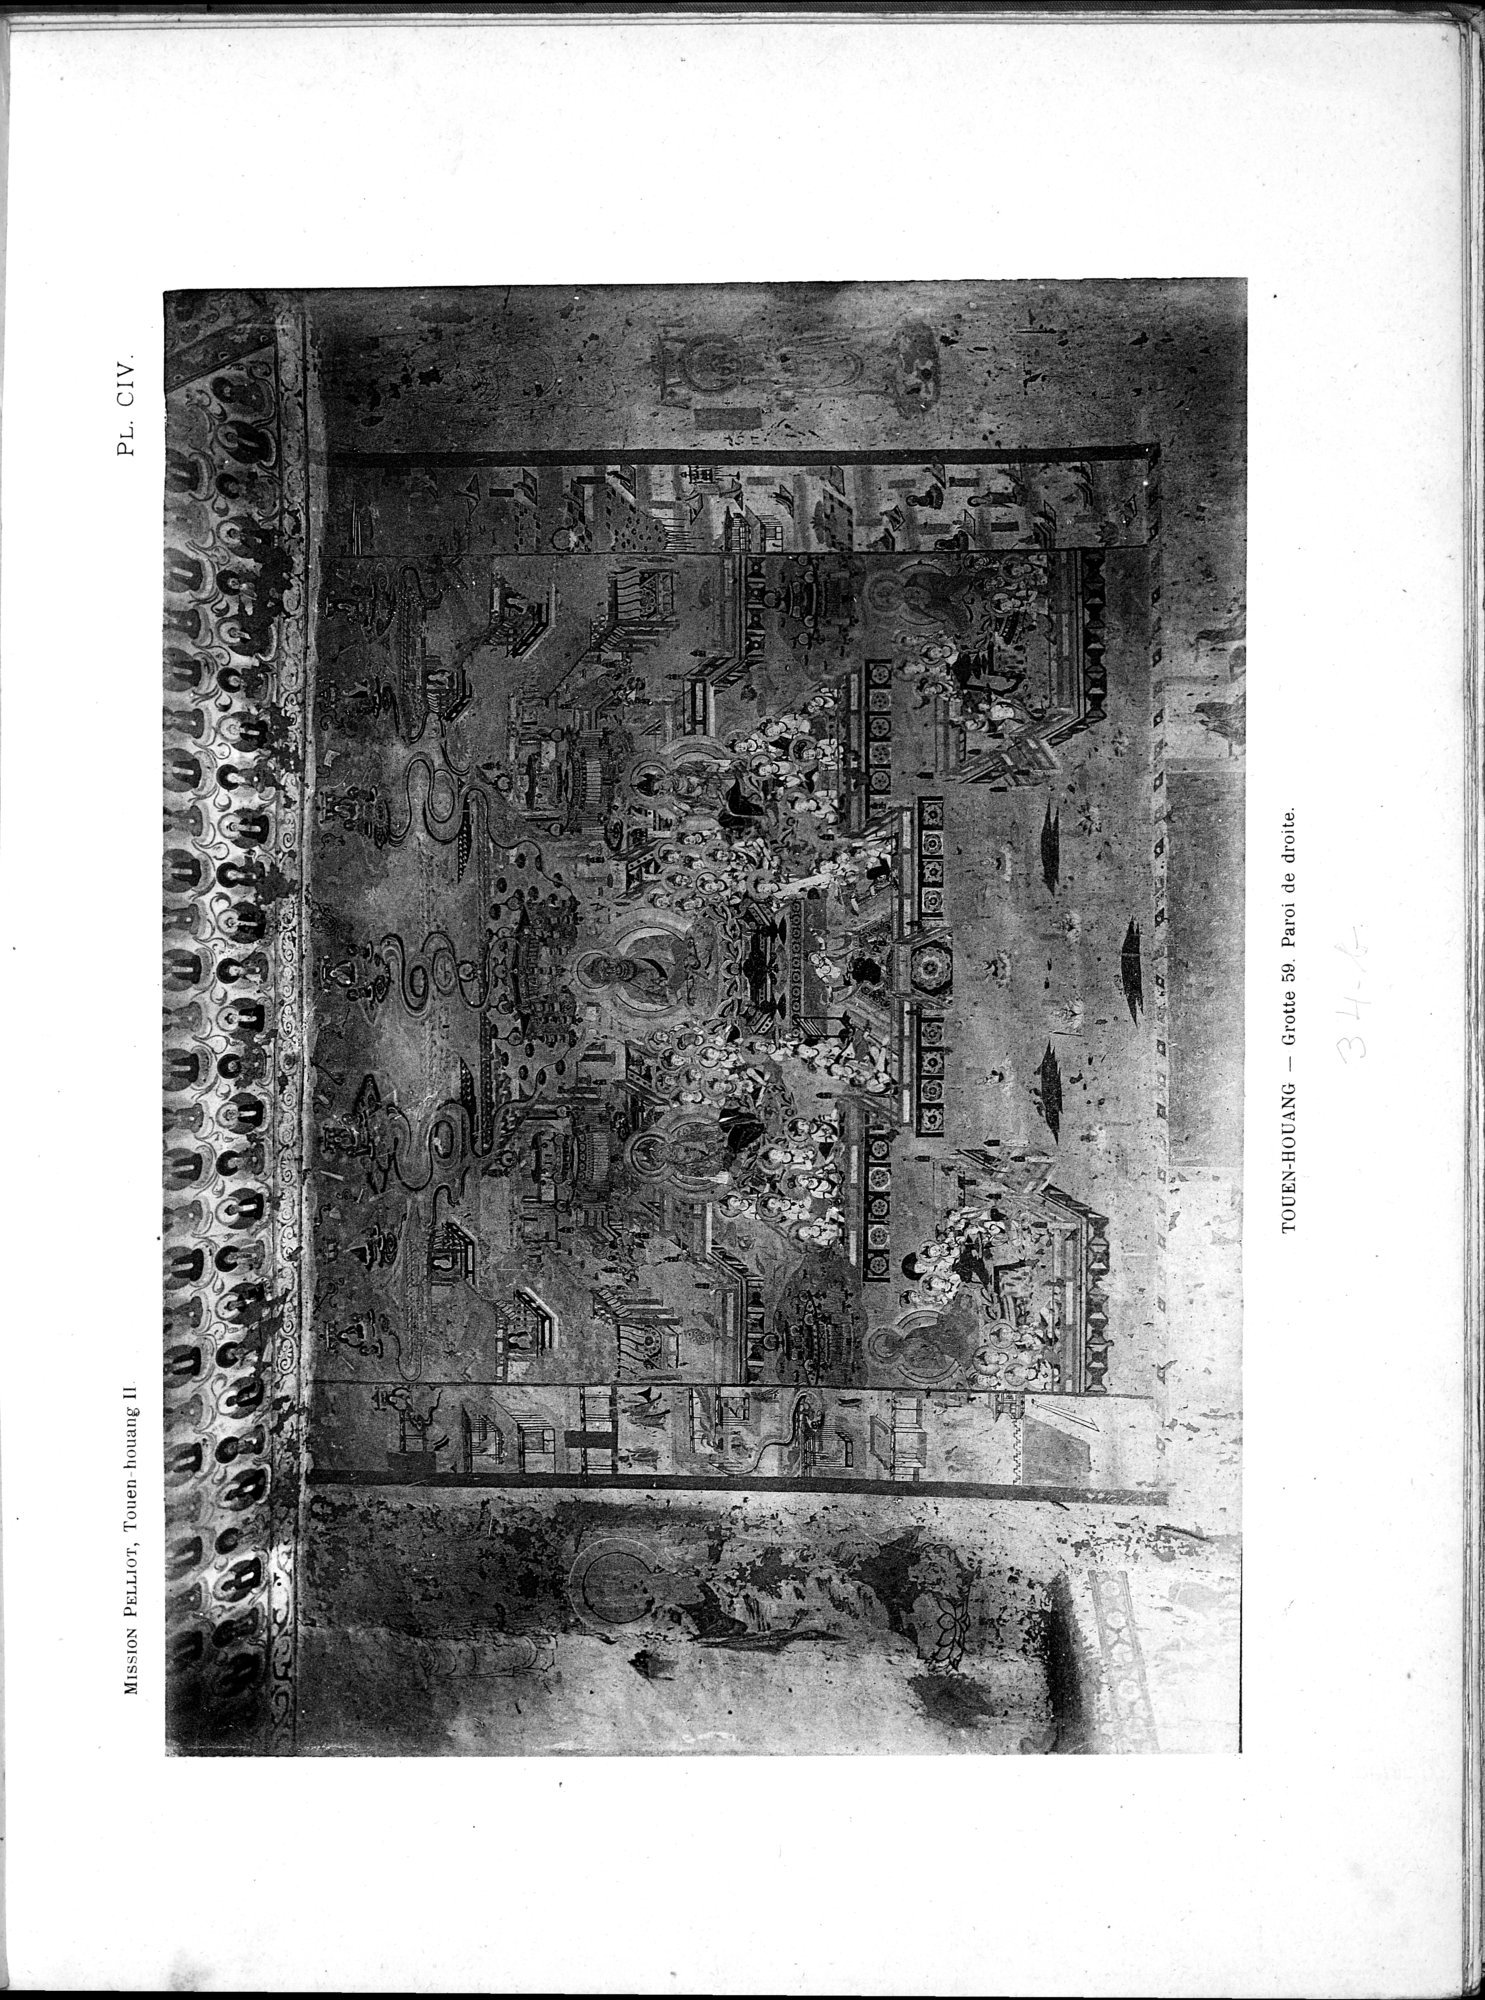 Les grottes de Touen-Houang : vol.2 / Page 89 (Grayscale High Resolution Image)